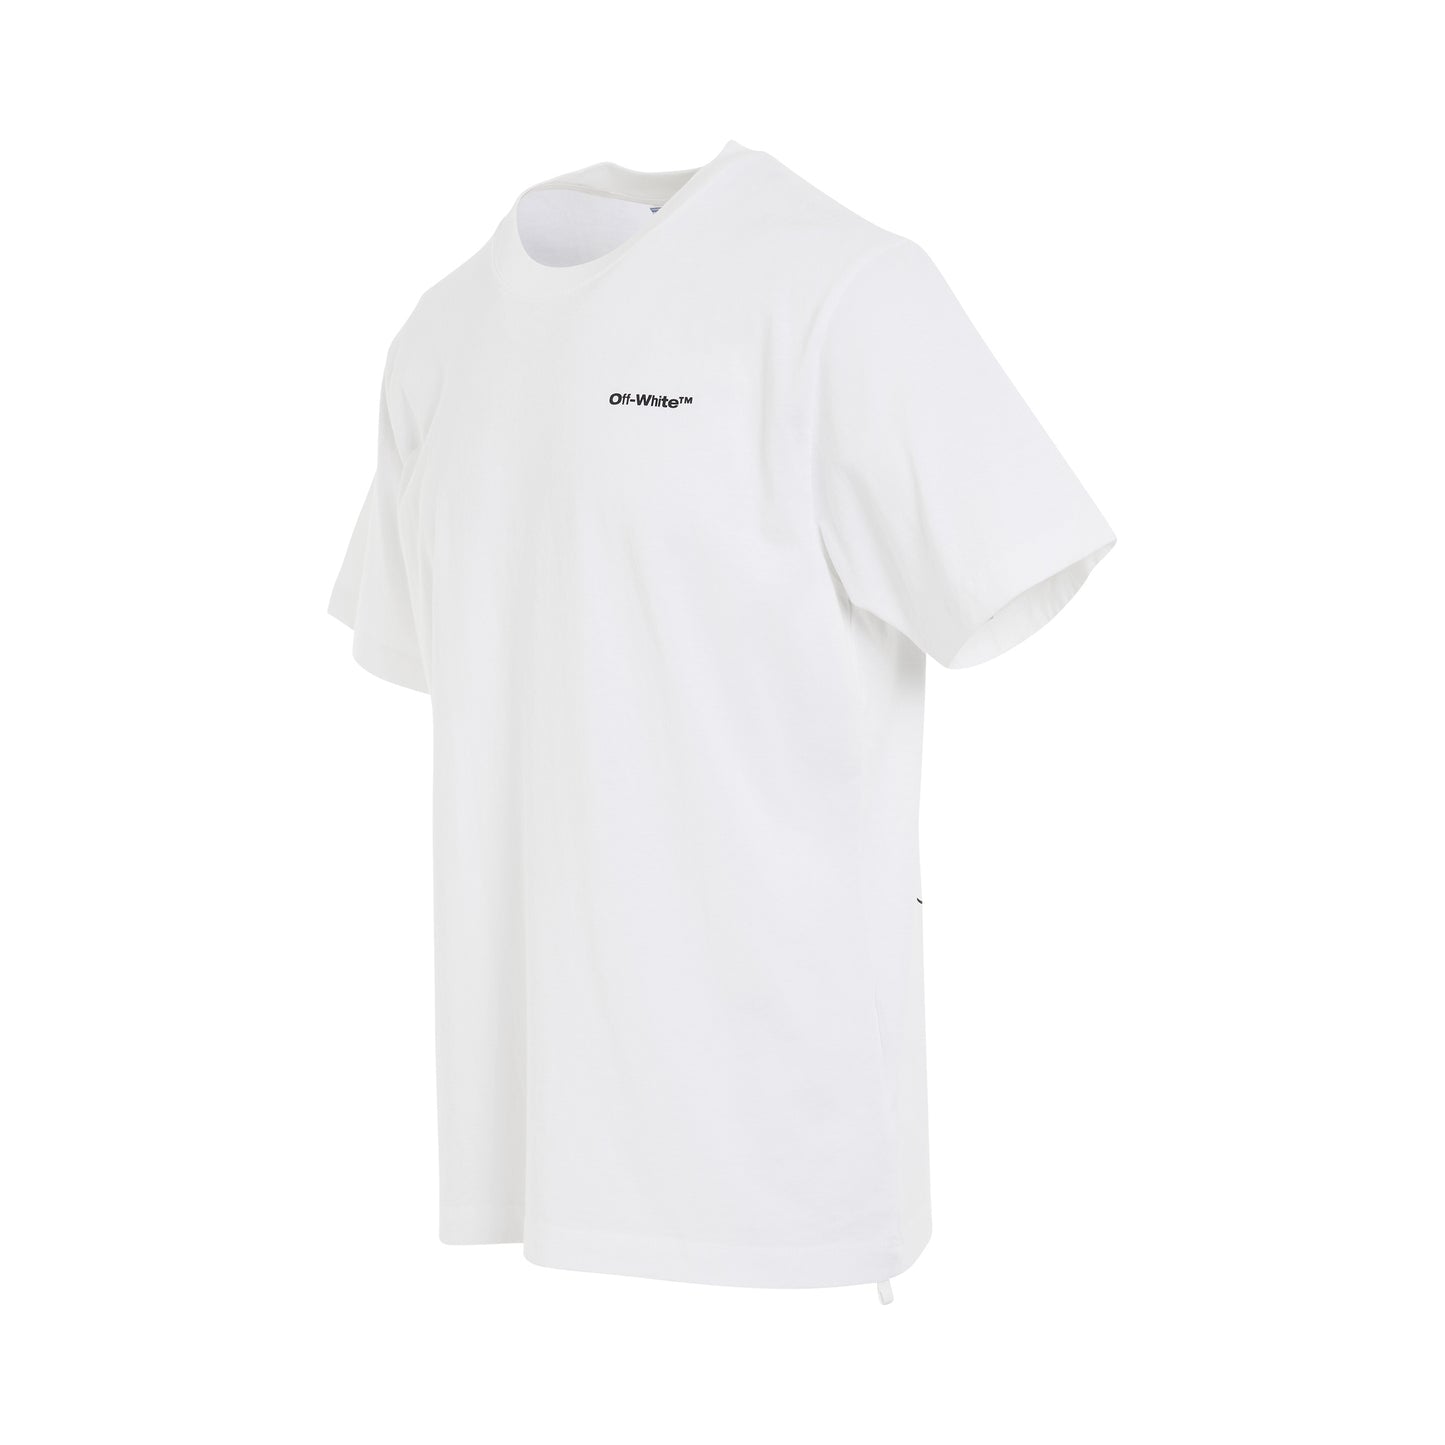 Wave Outline Diagonal Slim Fit T-Shirt in White/Black